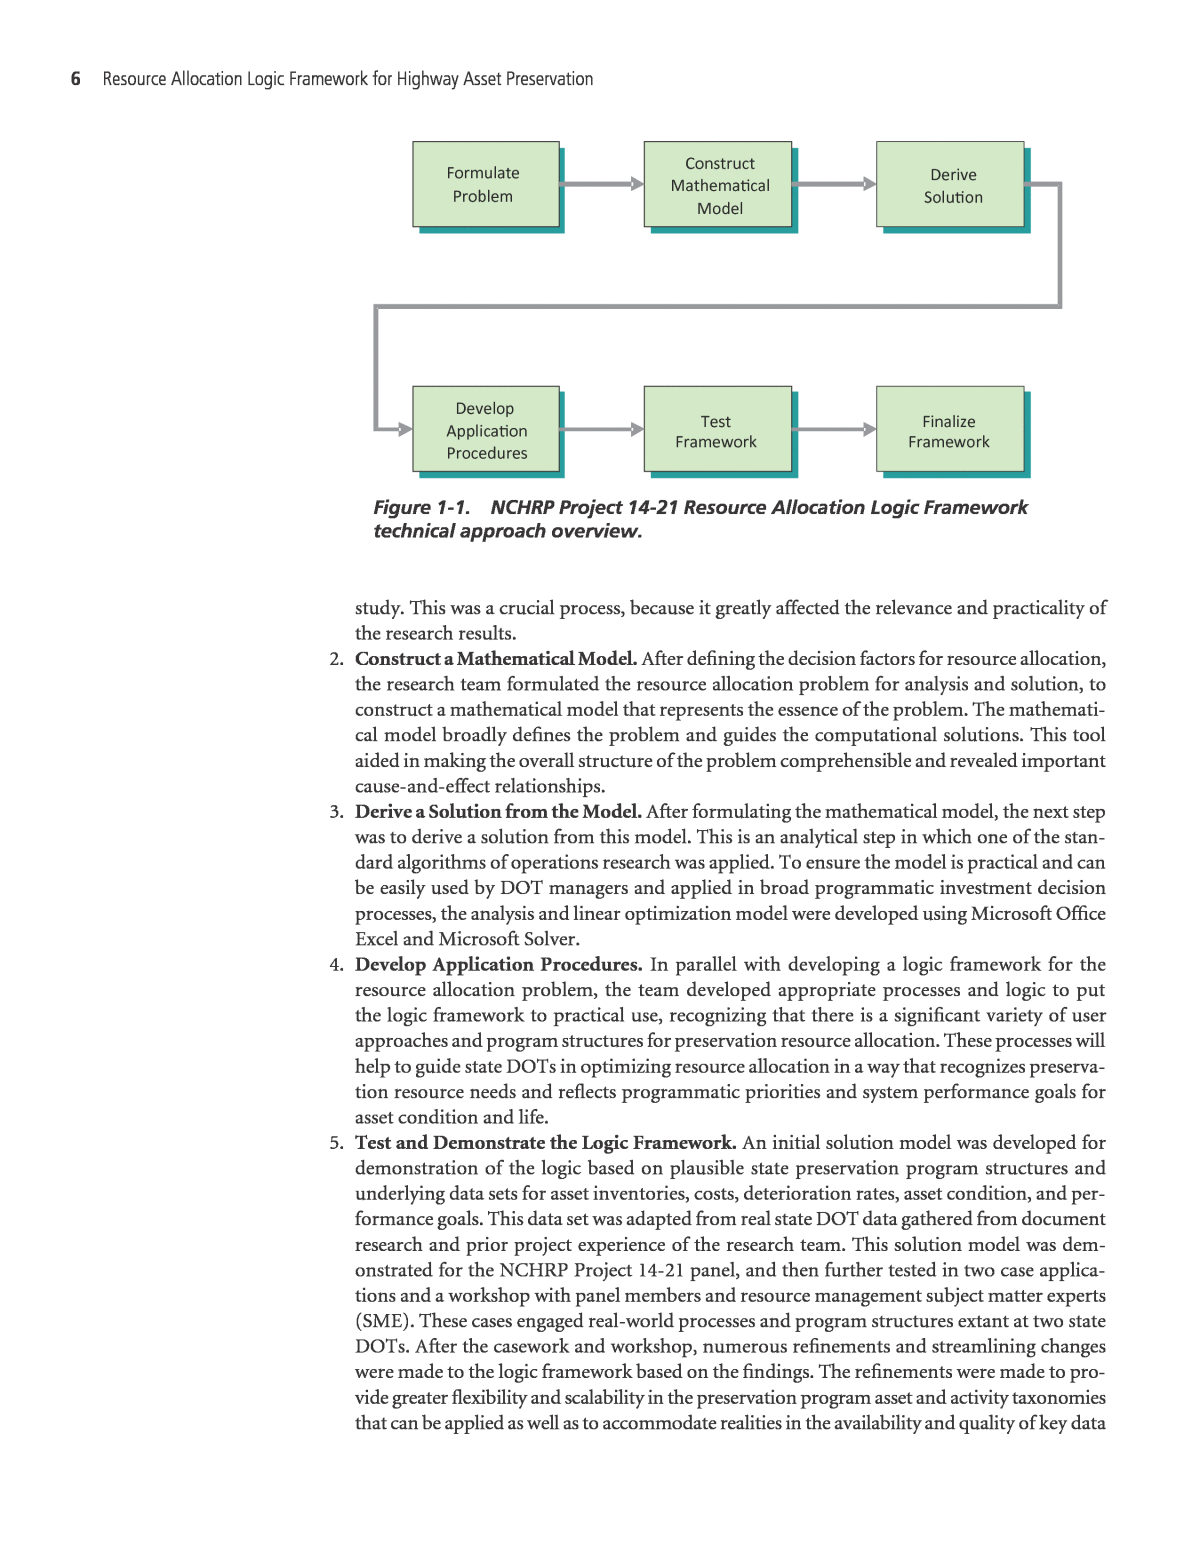 The Essence of Decision, PDF